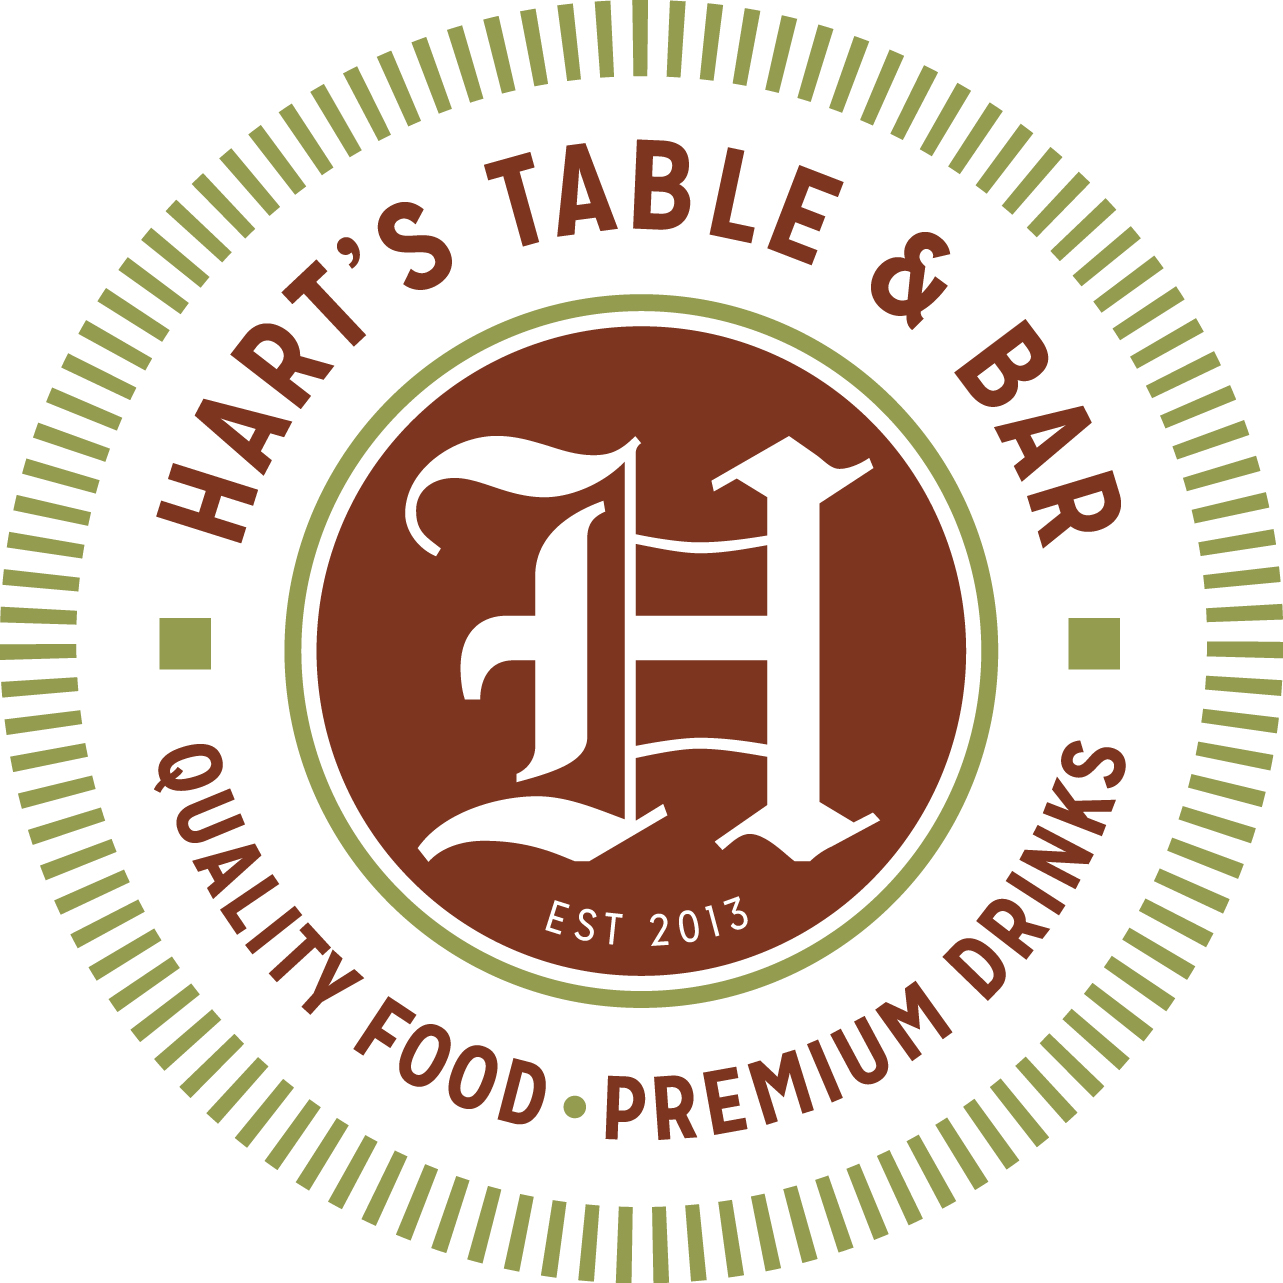 Hart's Table & Bar